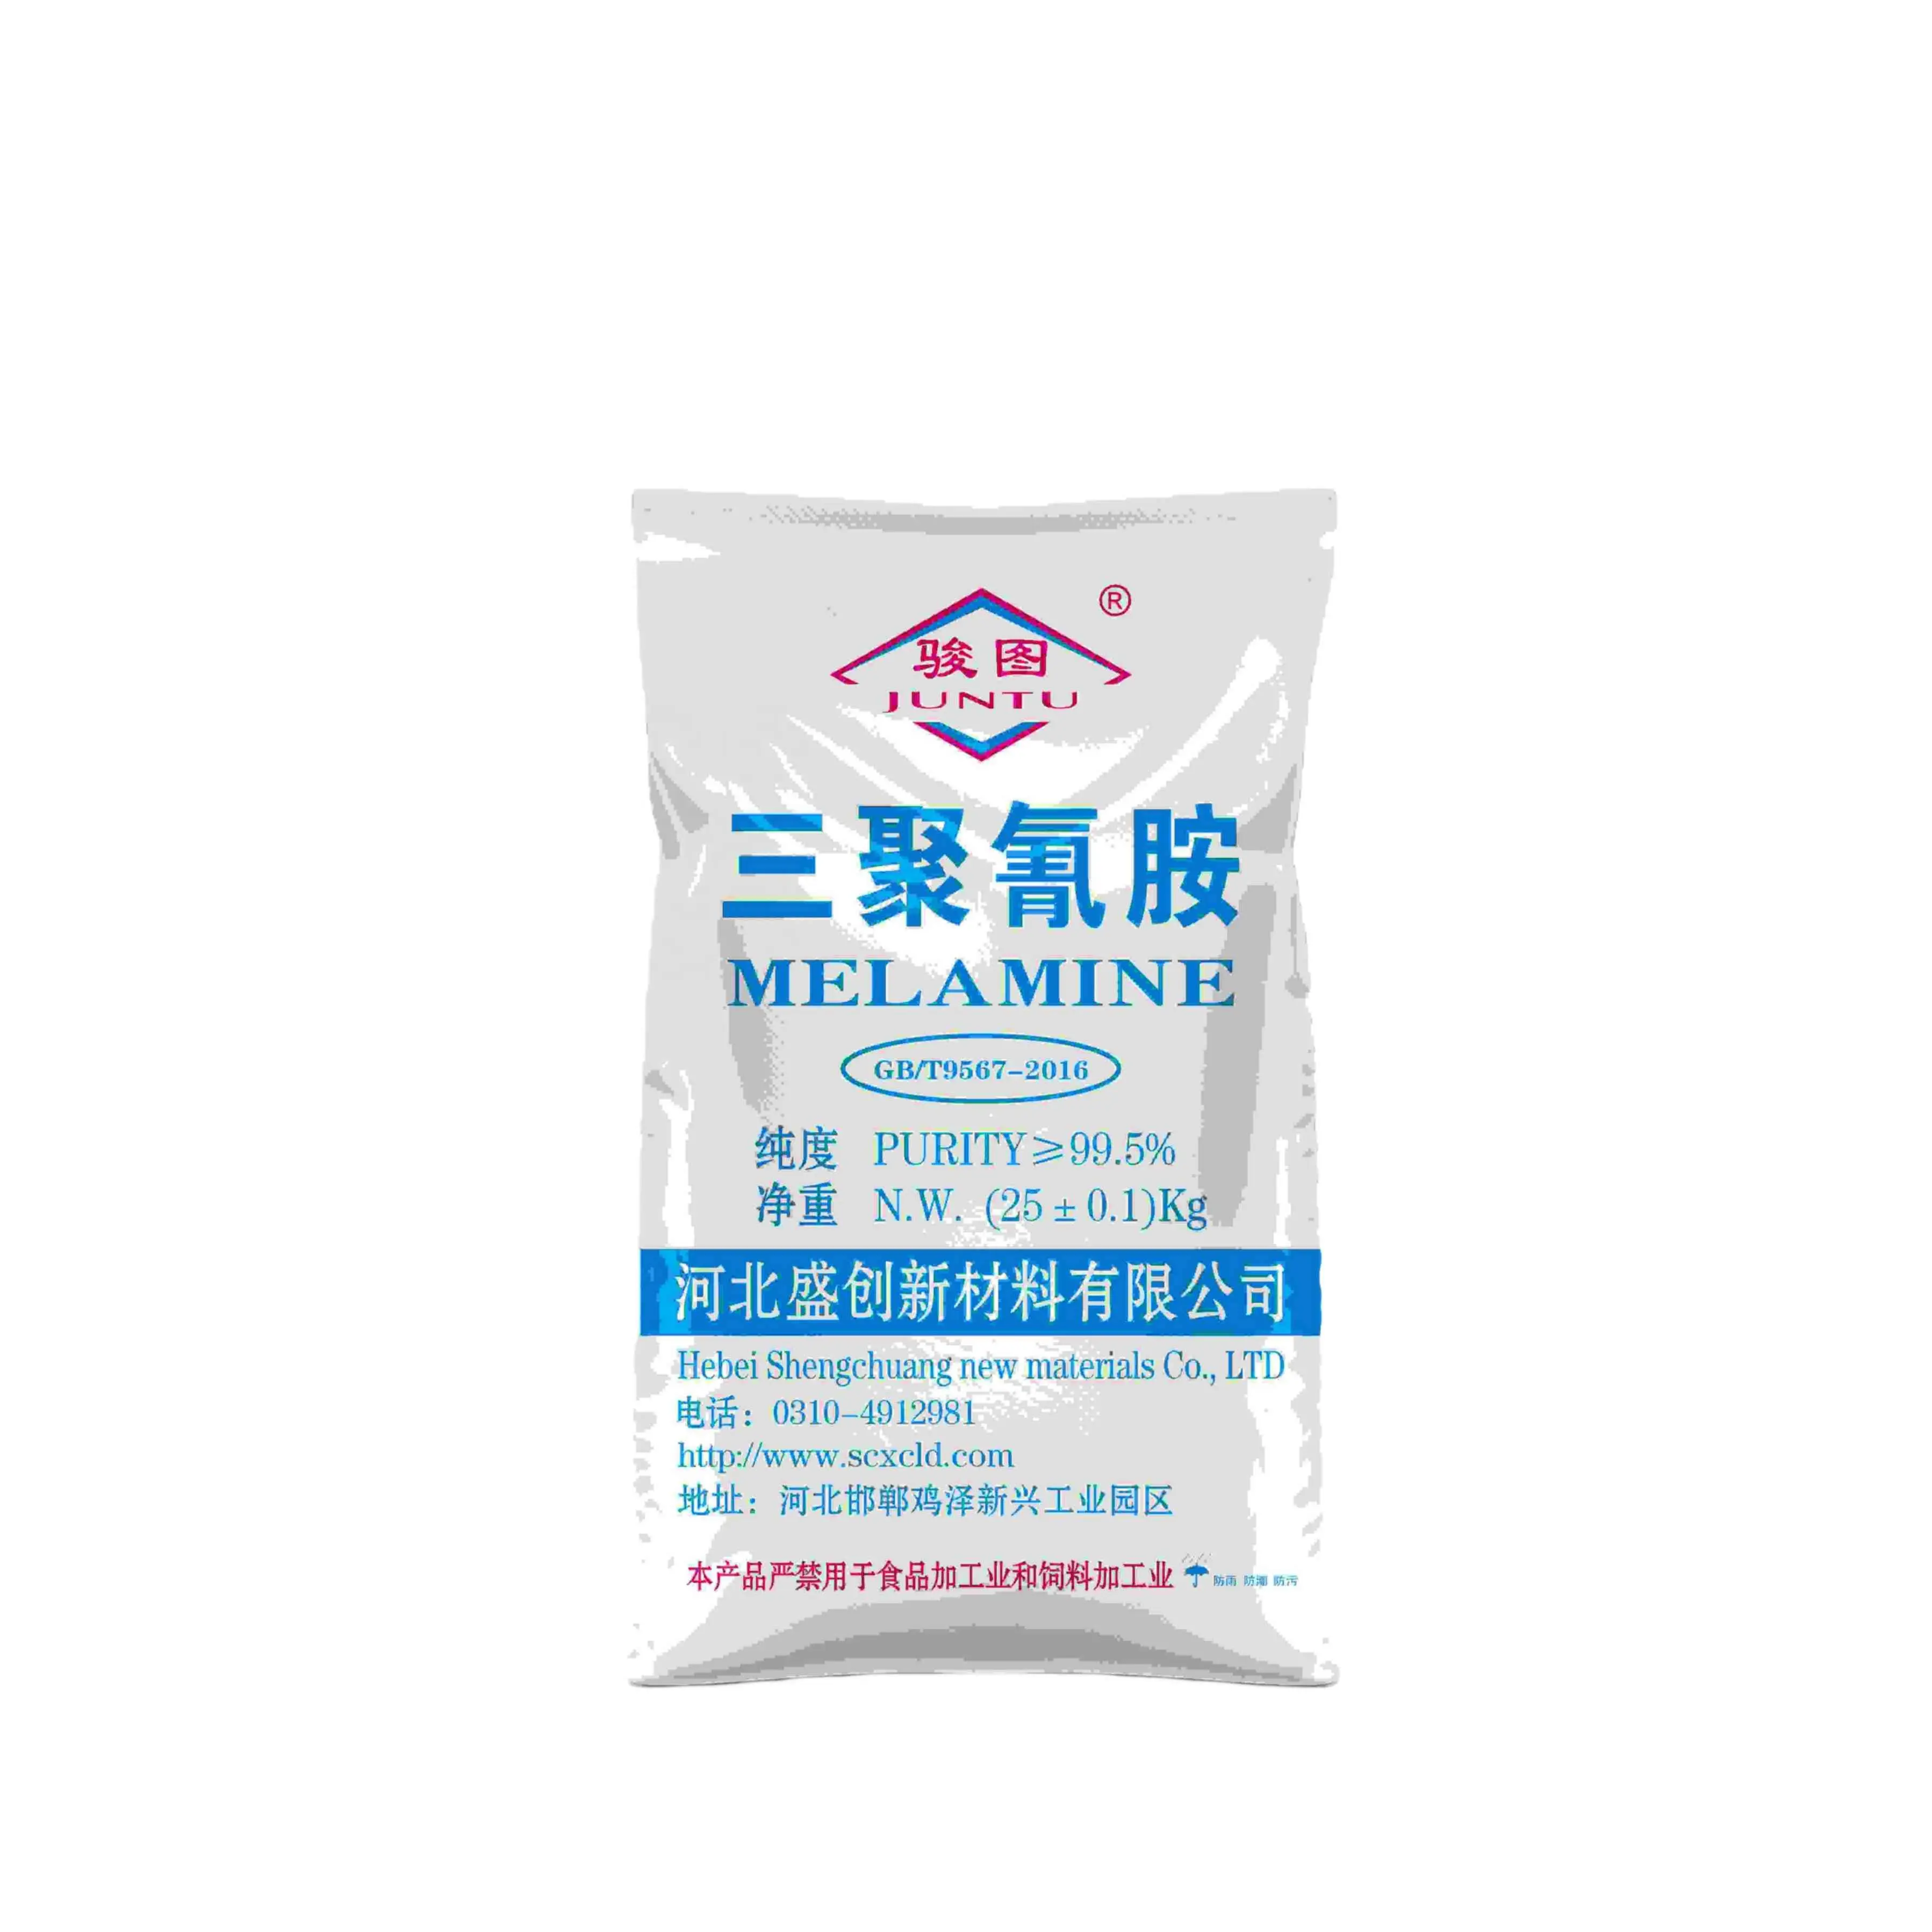 Melamine powder 99.8% Melamine high quality for Industrial Grade CAS 108-78-1 C3h6n6